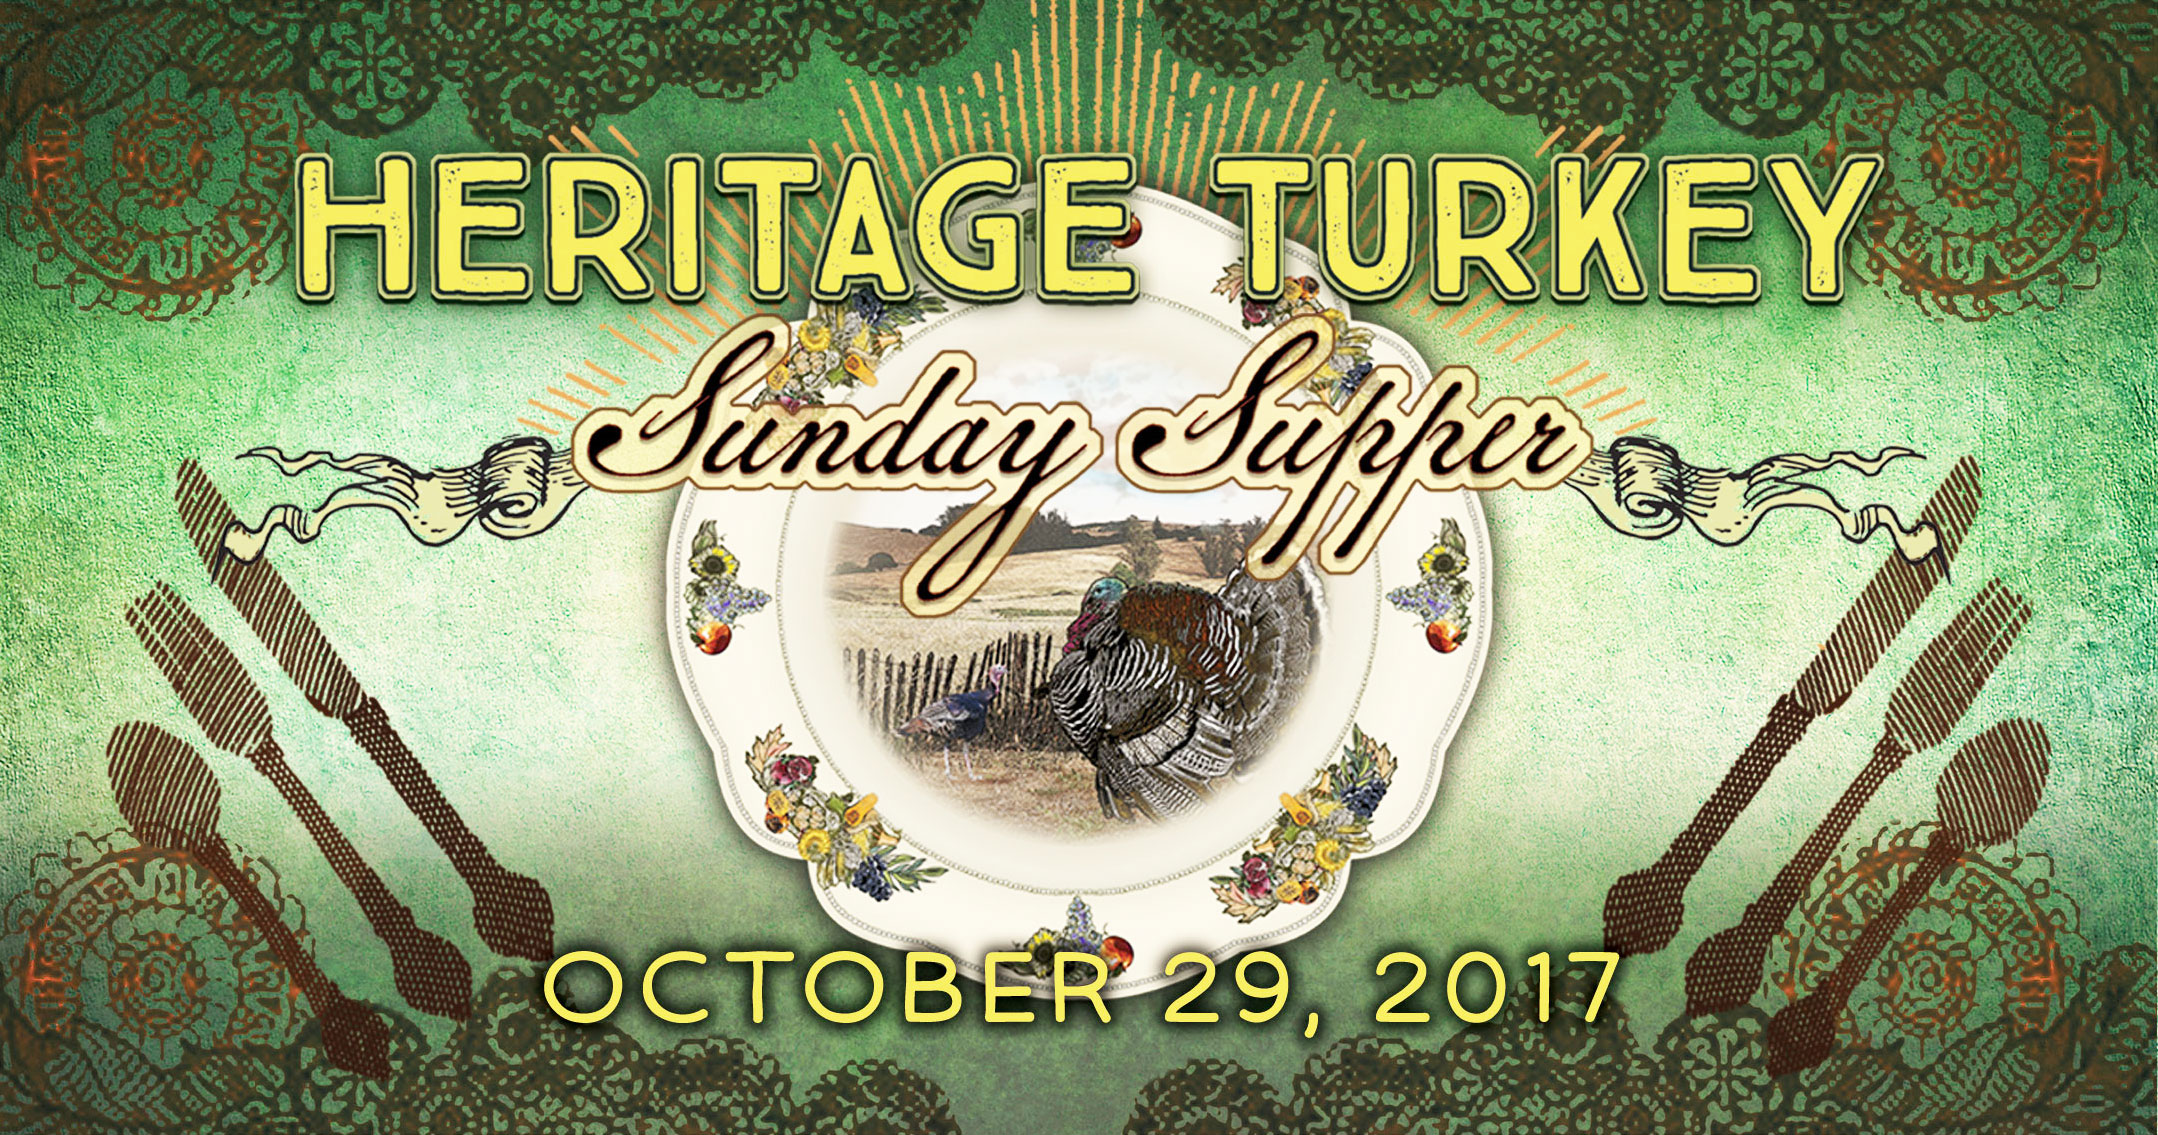 Heritage Turkey Sunday Supper